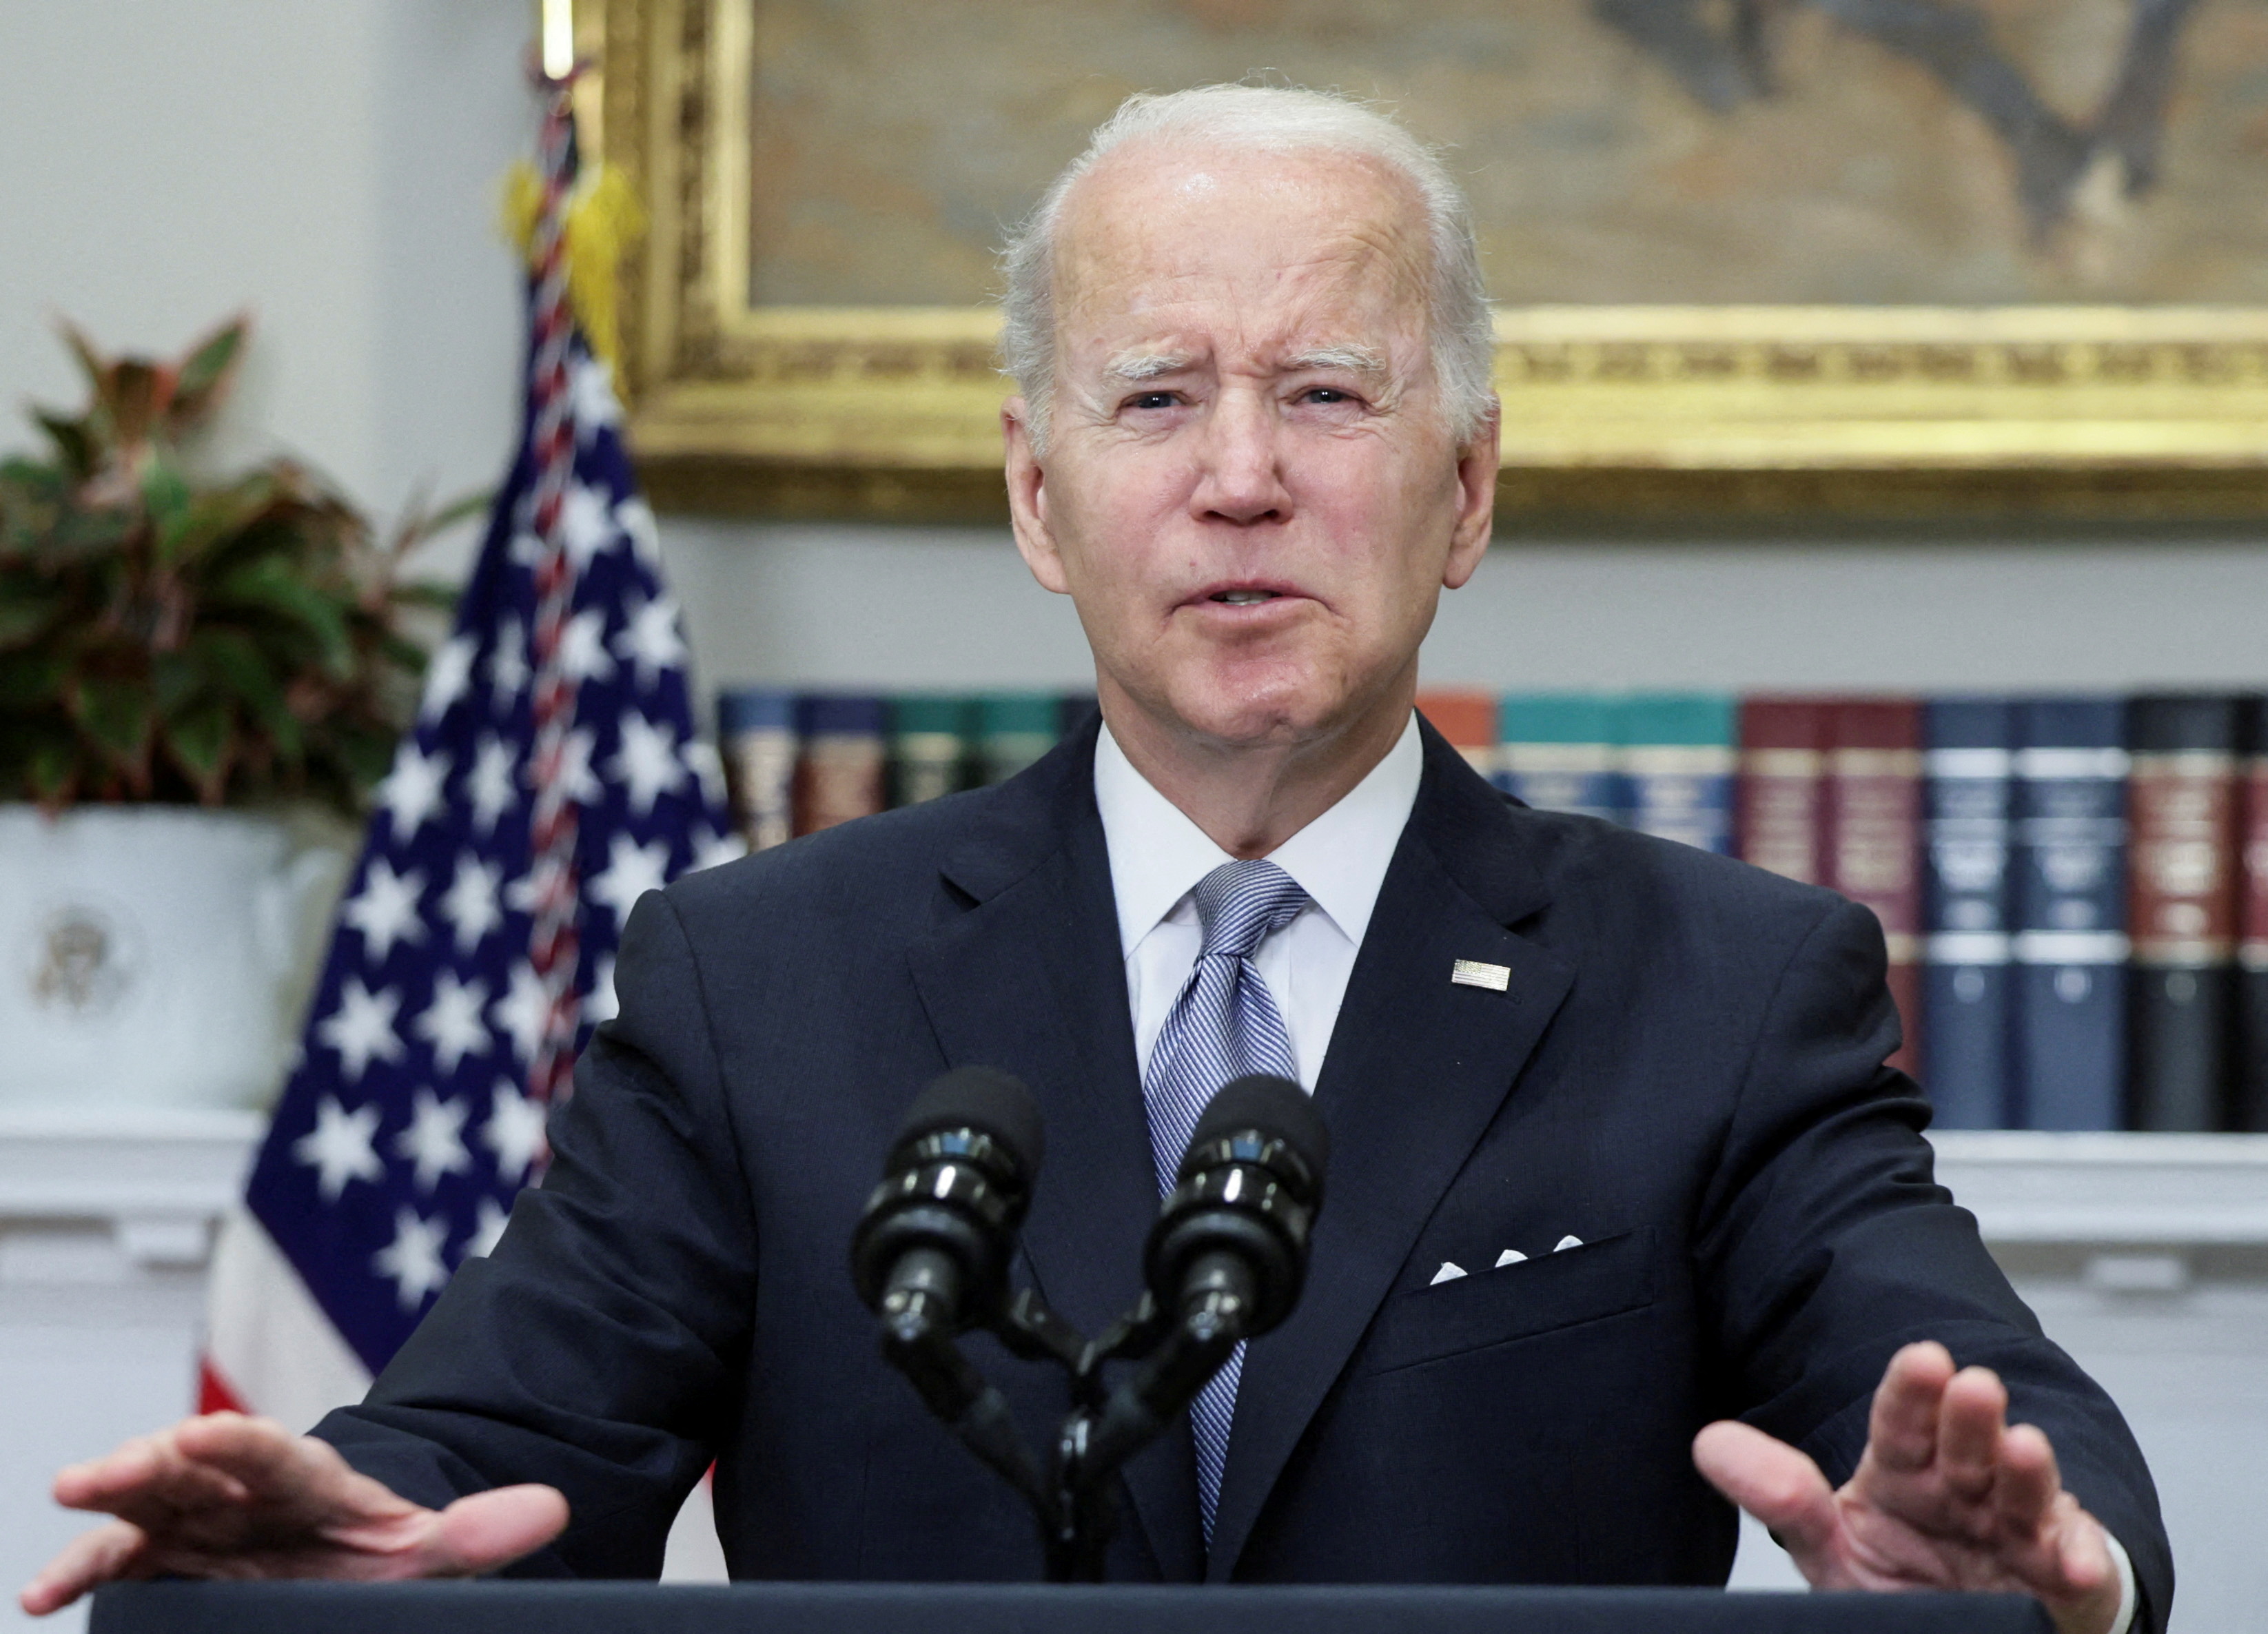 U.S. President Joe Biden during a speech at the White House in Washington